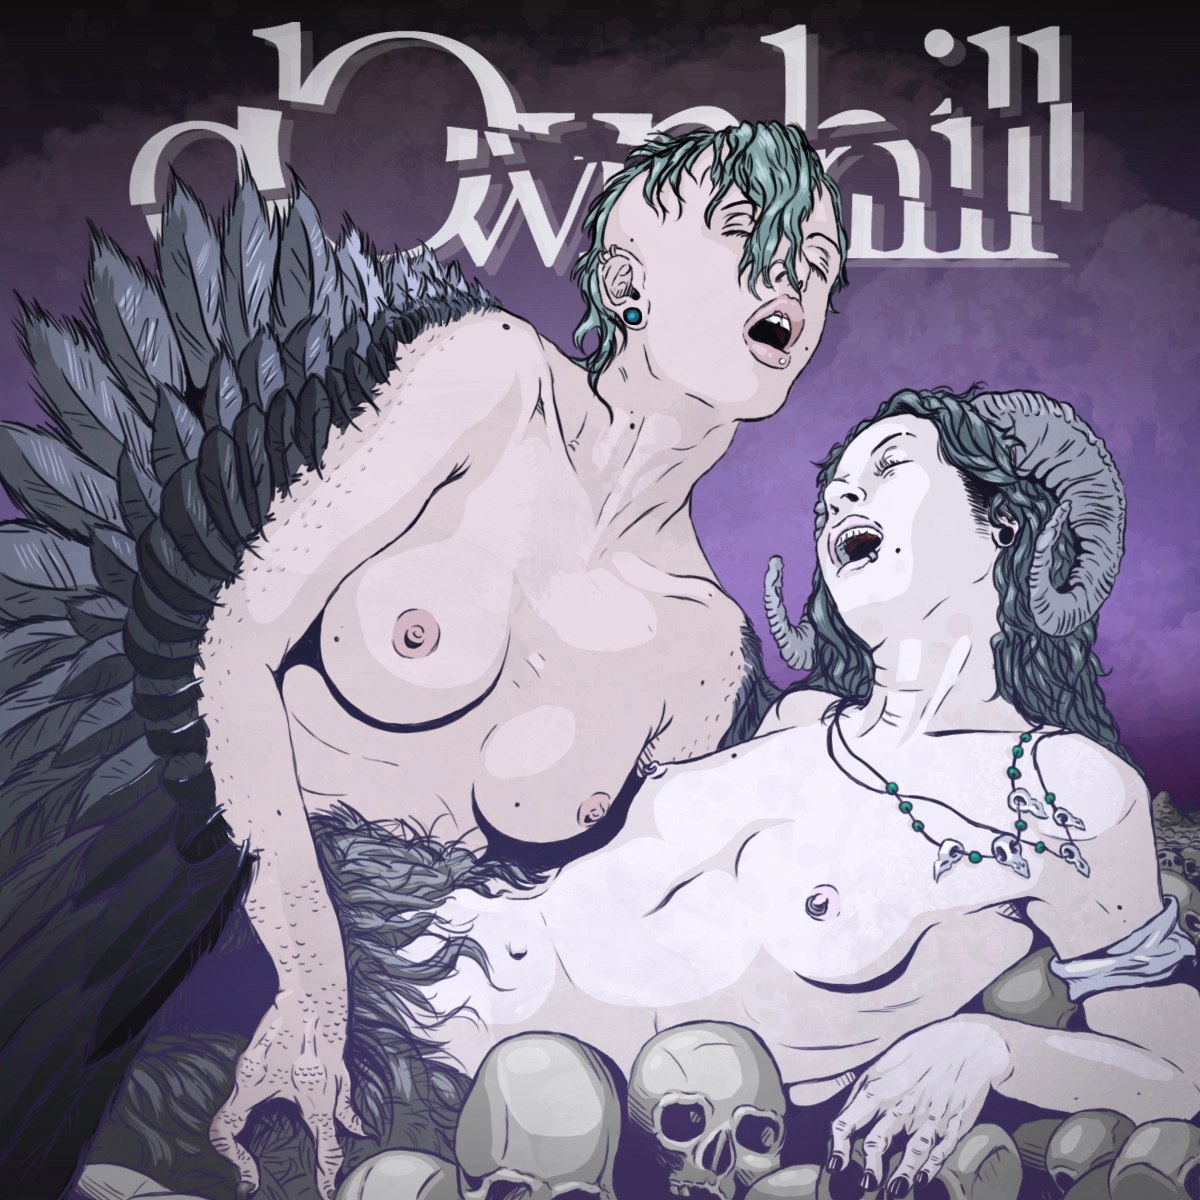 Брестчане dOwnhill выпустили EP "dOwnhill"